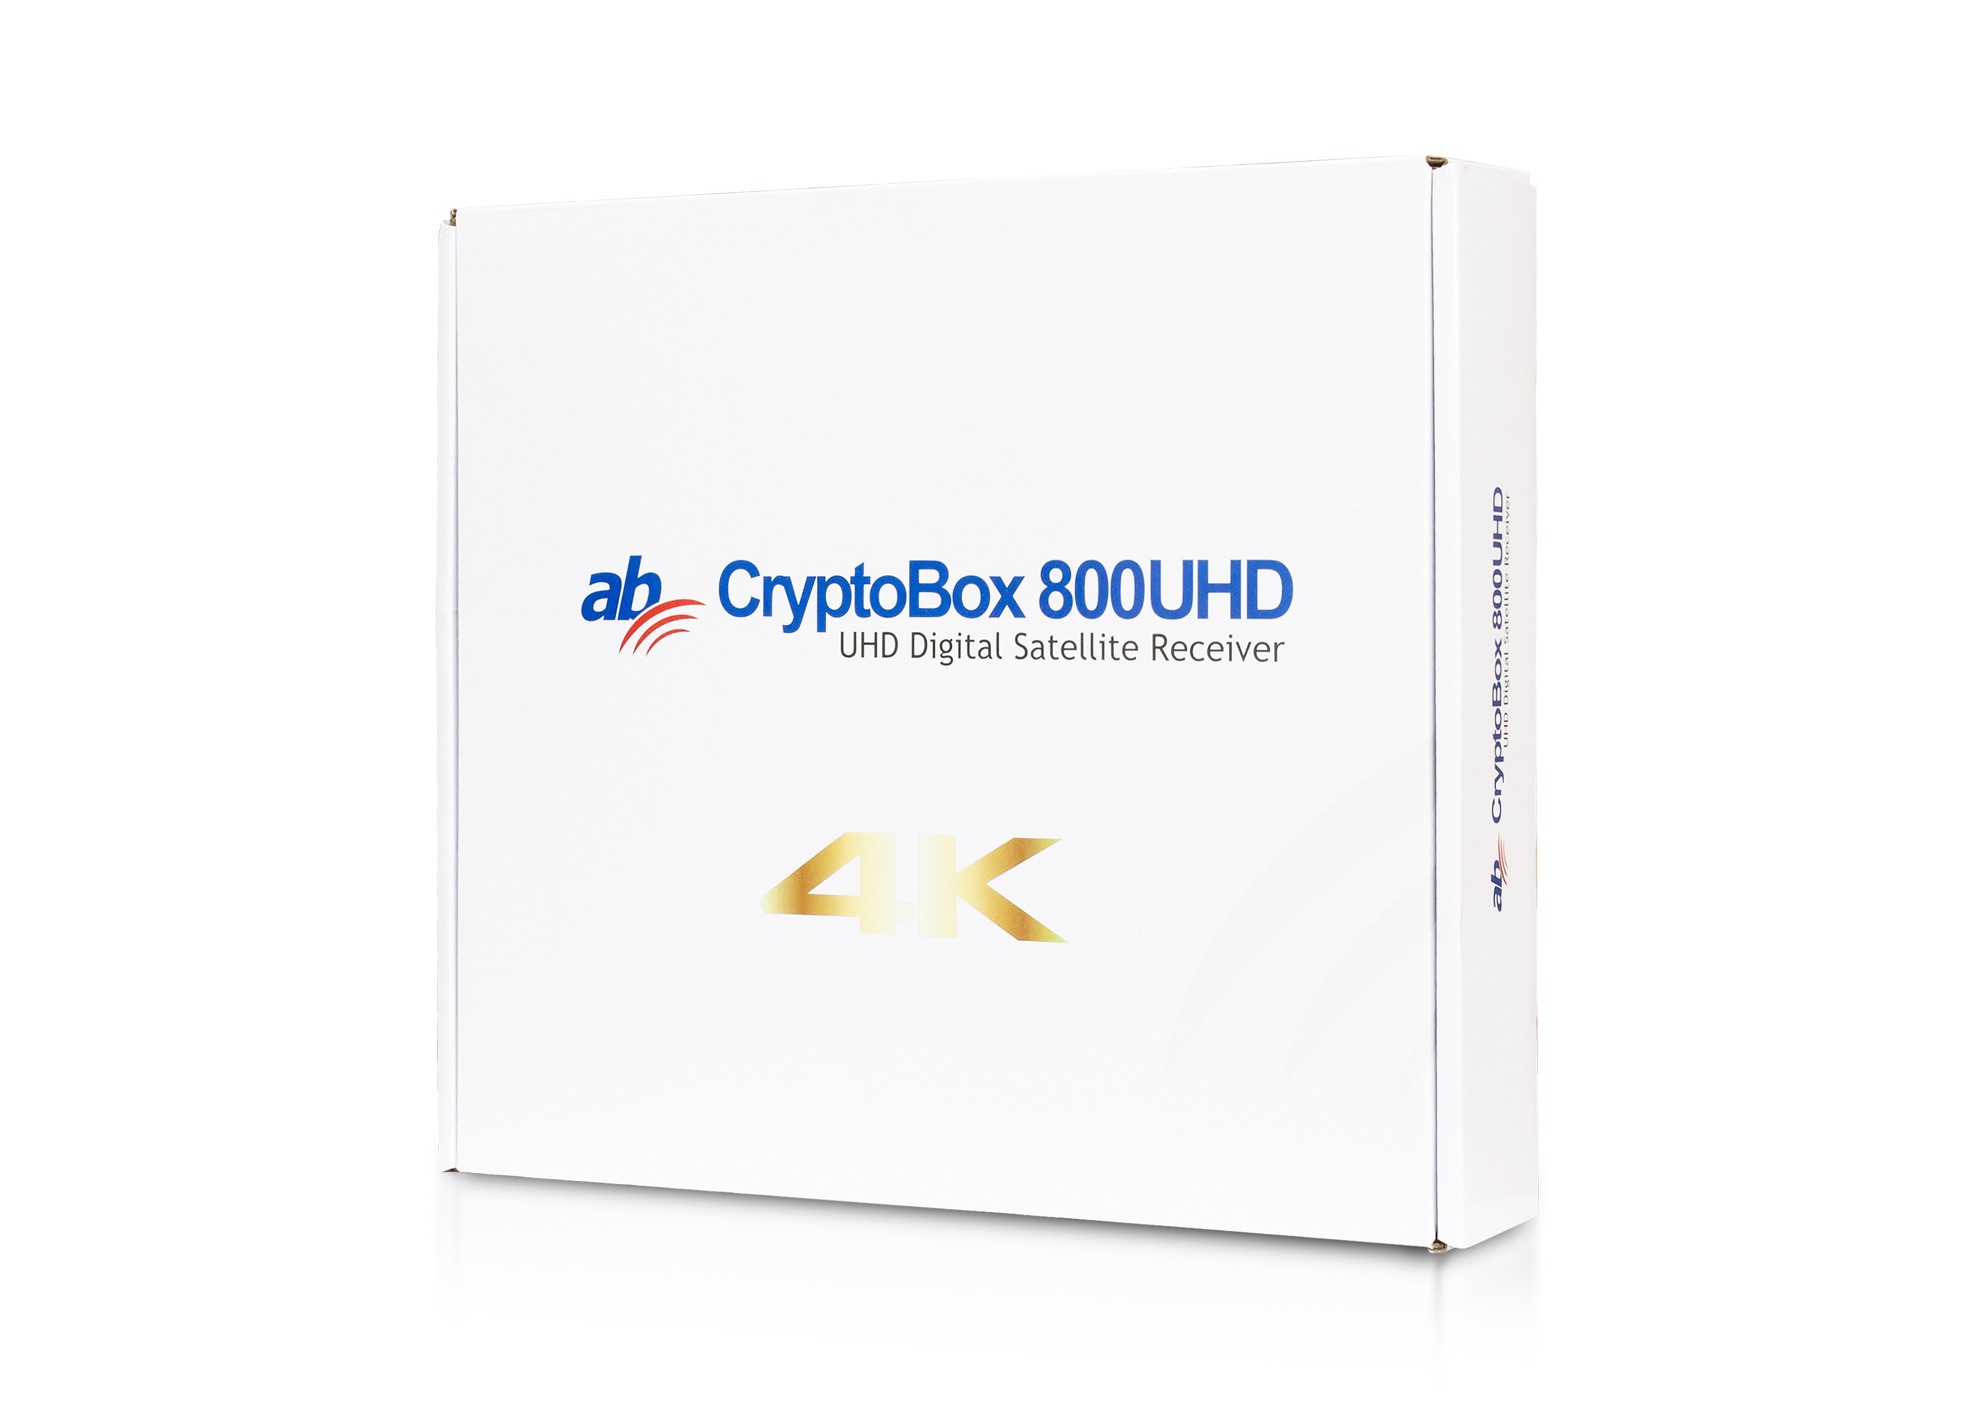 AB CryptoBox 800UHD